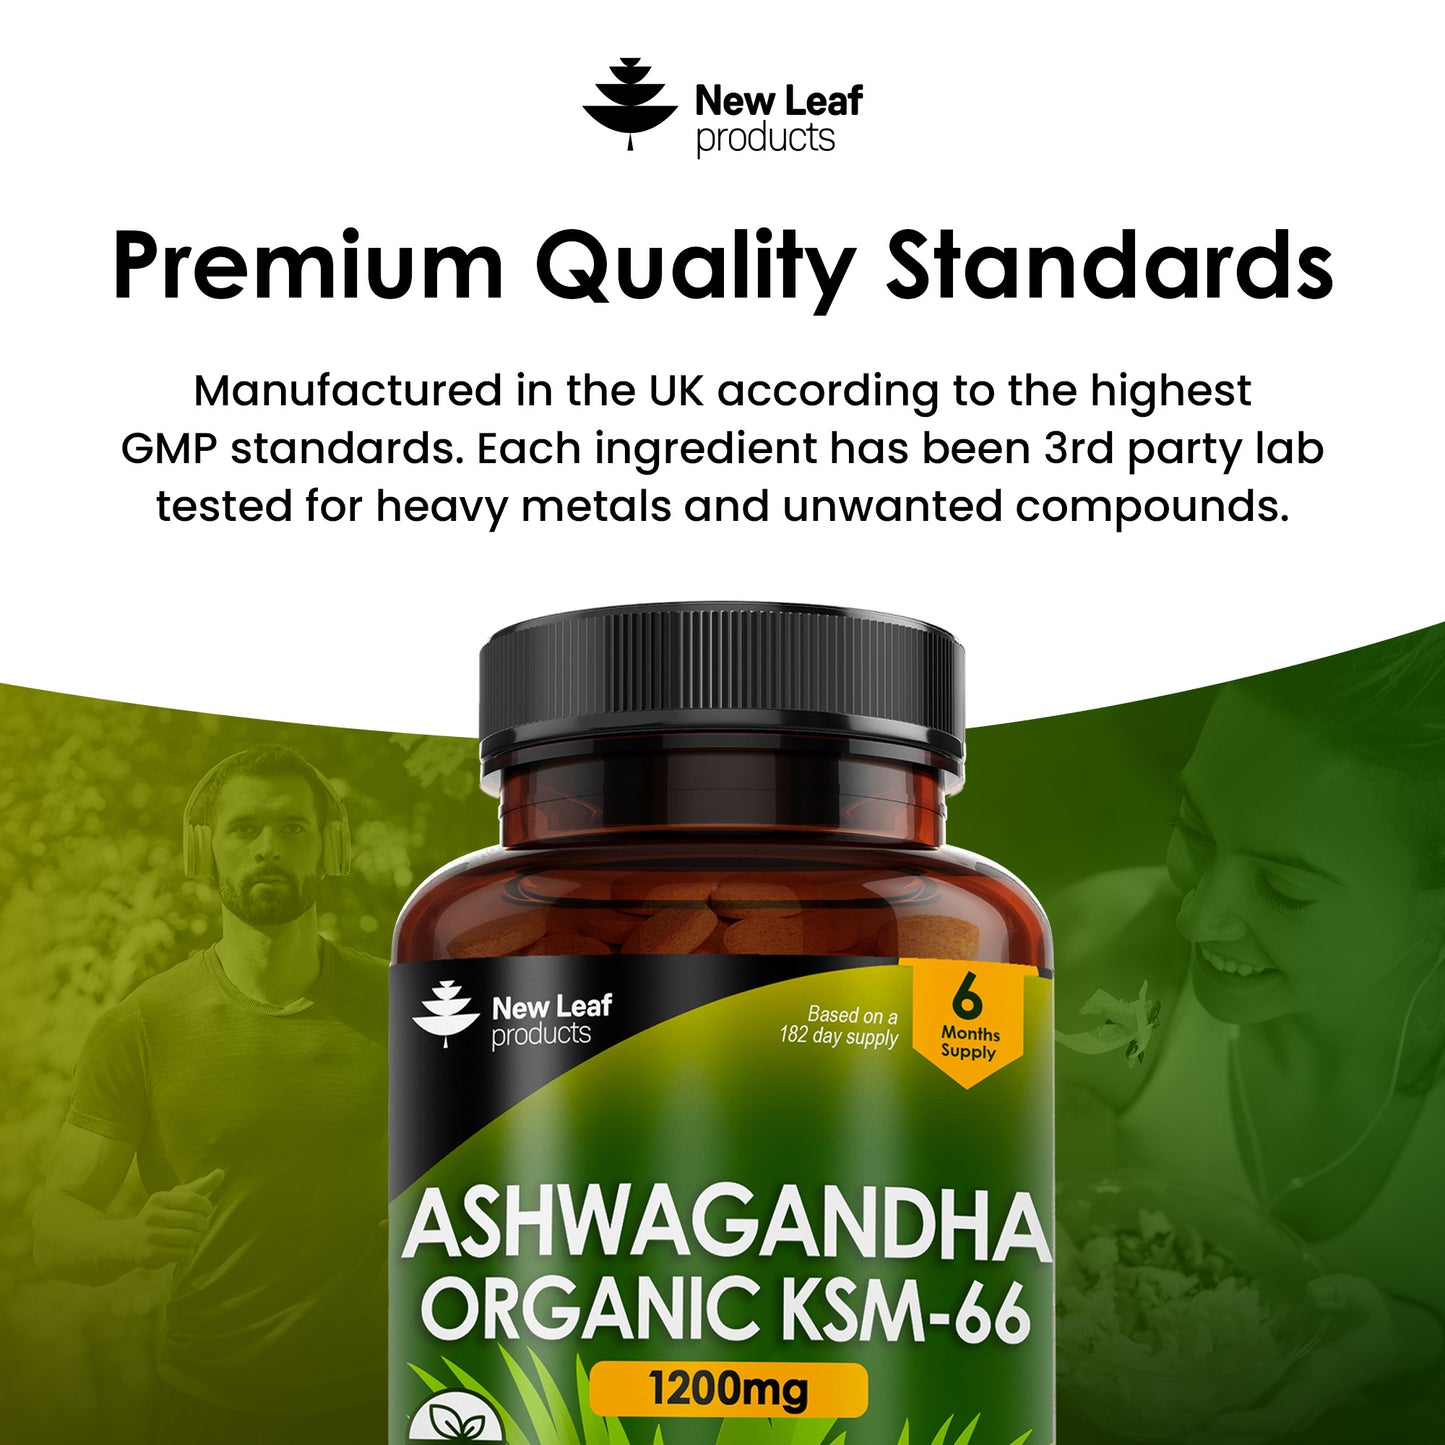 Ashwagandha KSM-66 1200mg Root Extract - High Strength  - Value 365 Vegan Tablets